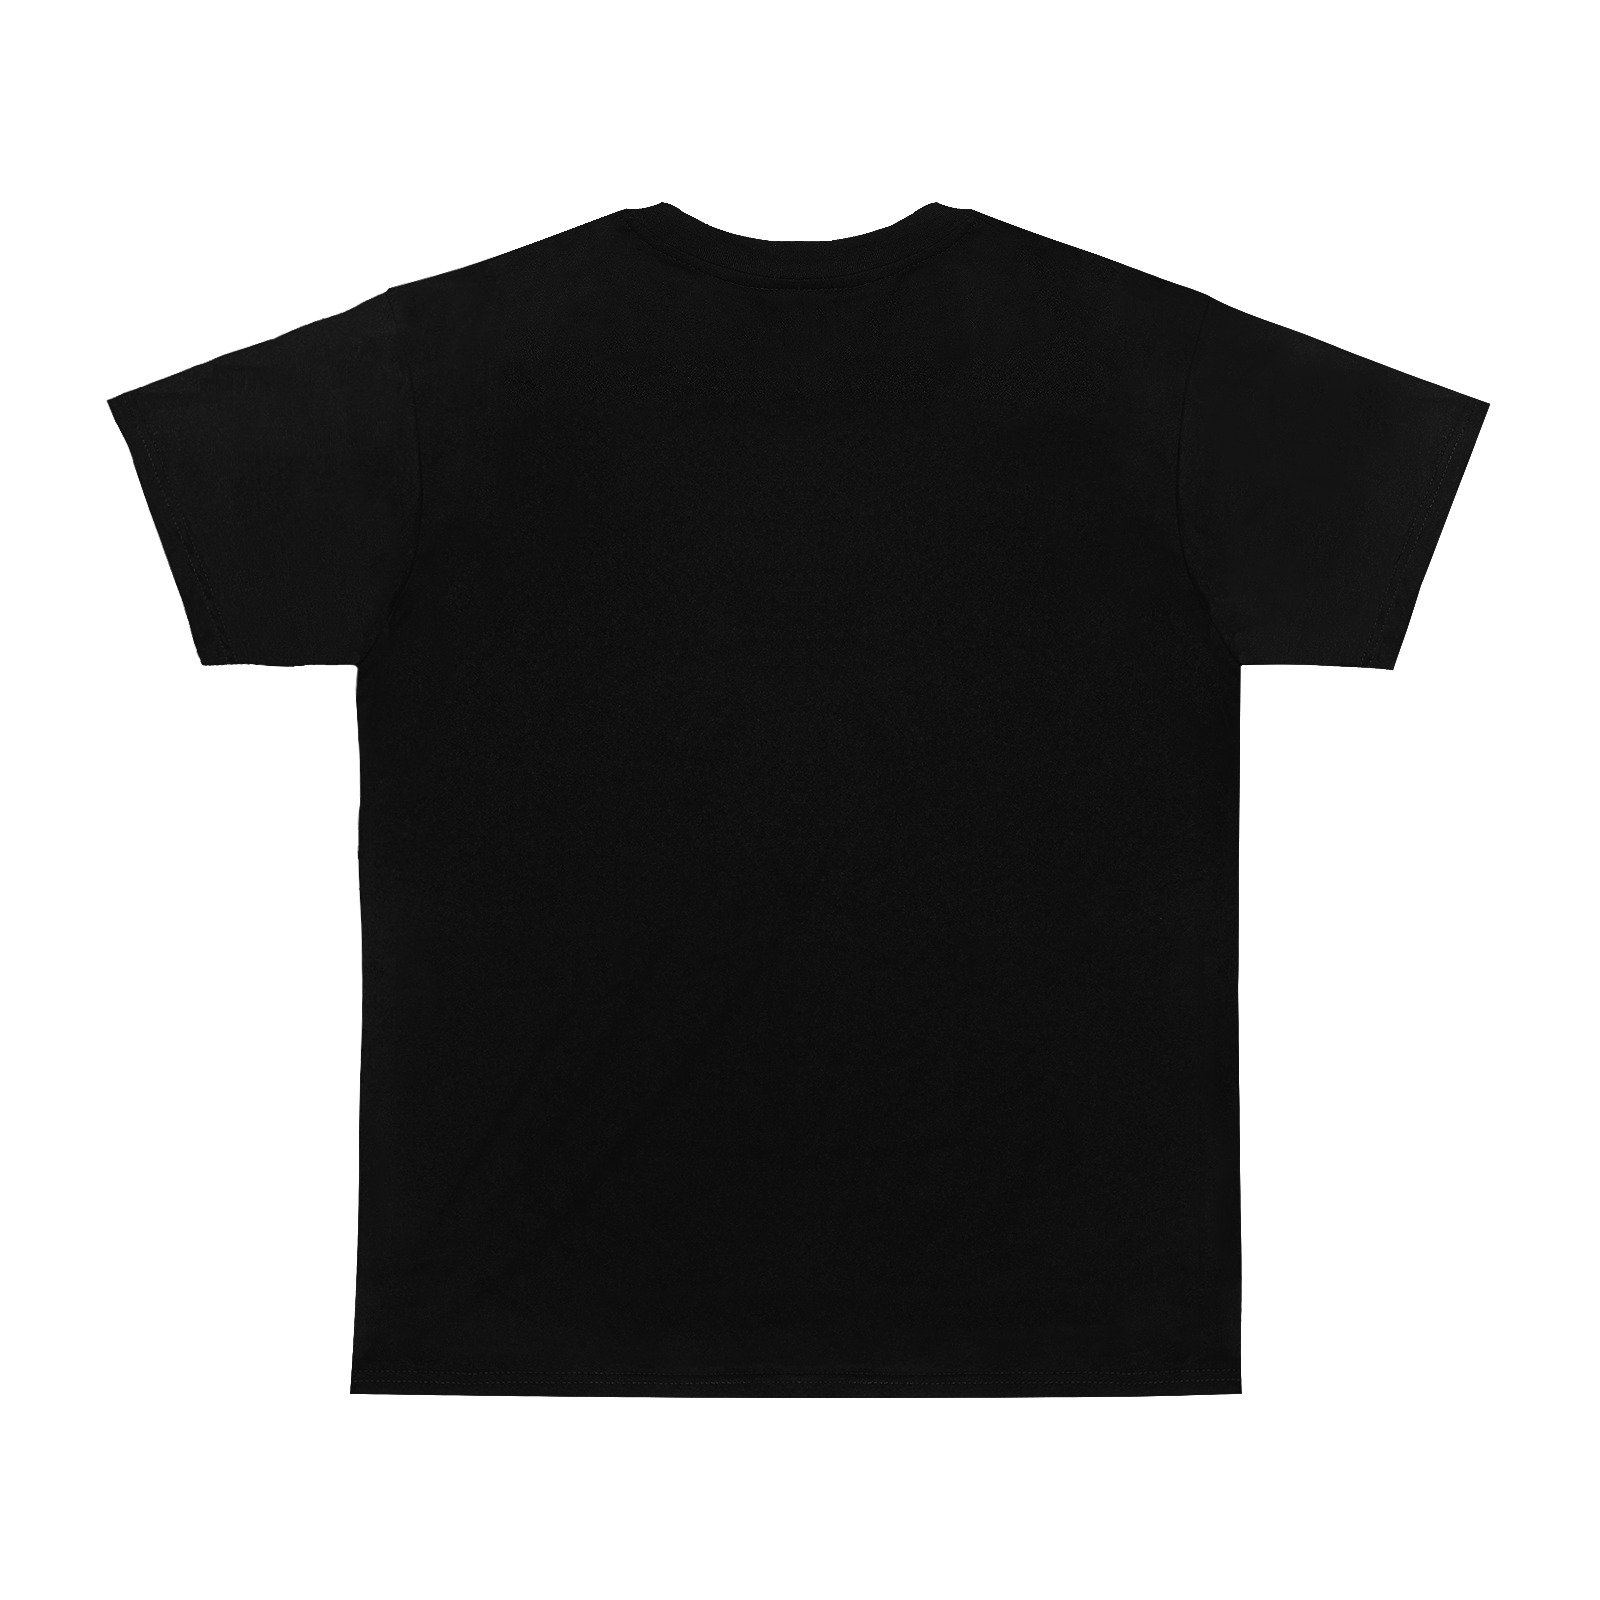 Bens Smokehouse Black Shirt w/Logo Men's T-Shirt in USA Size (Two Sides Printing)